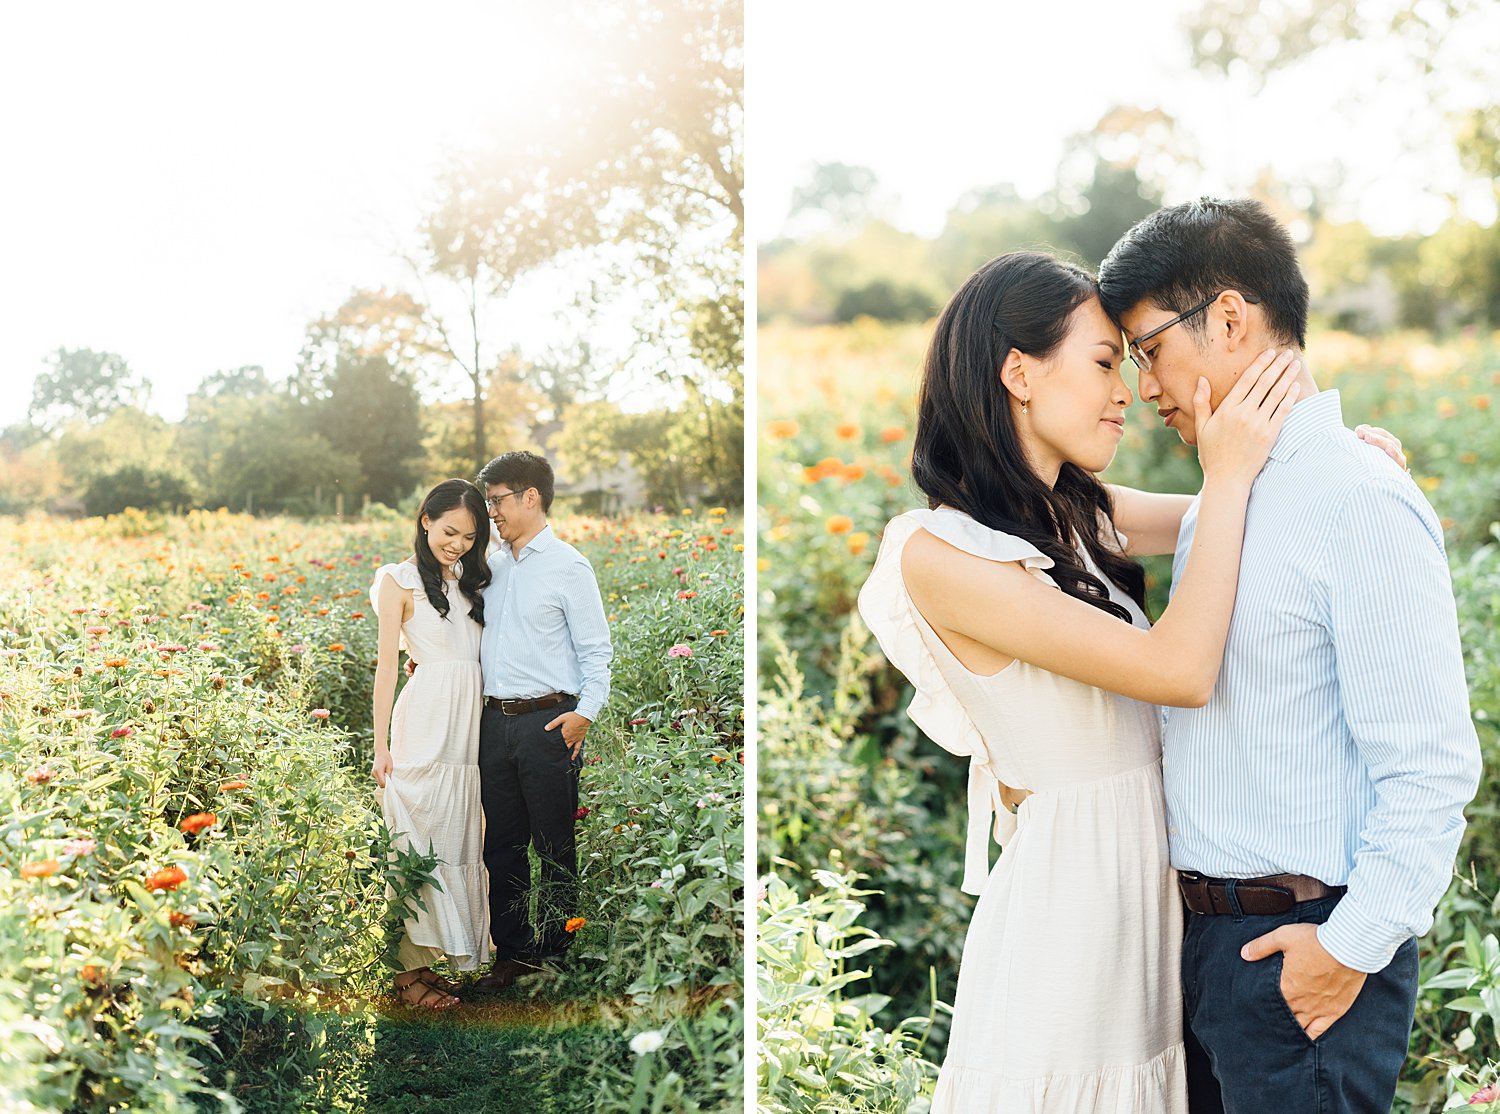 Lauren + Justin - Maple Acres Engagement Session - Maryland Wedding Photographer - Alison Dunn Photography photo